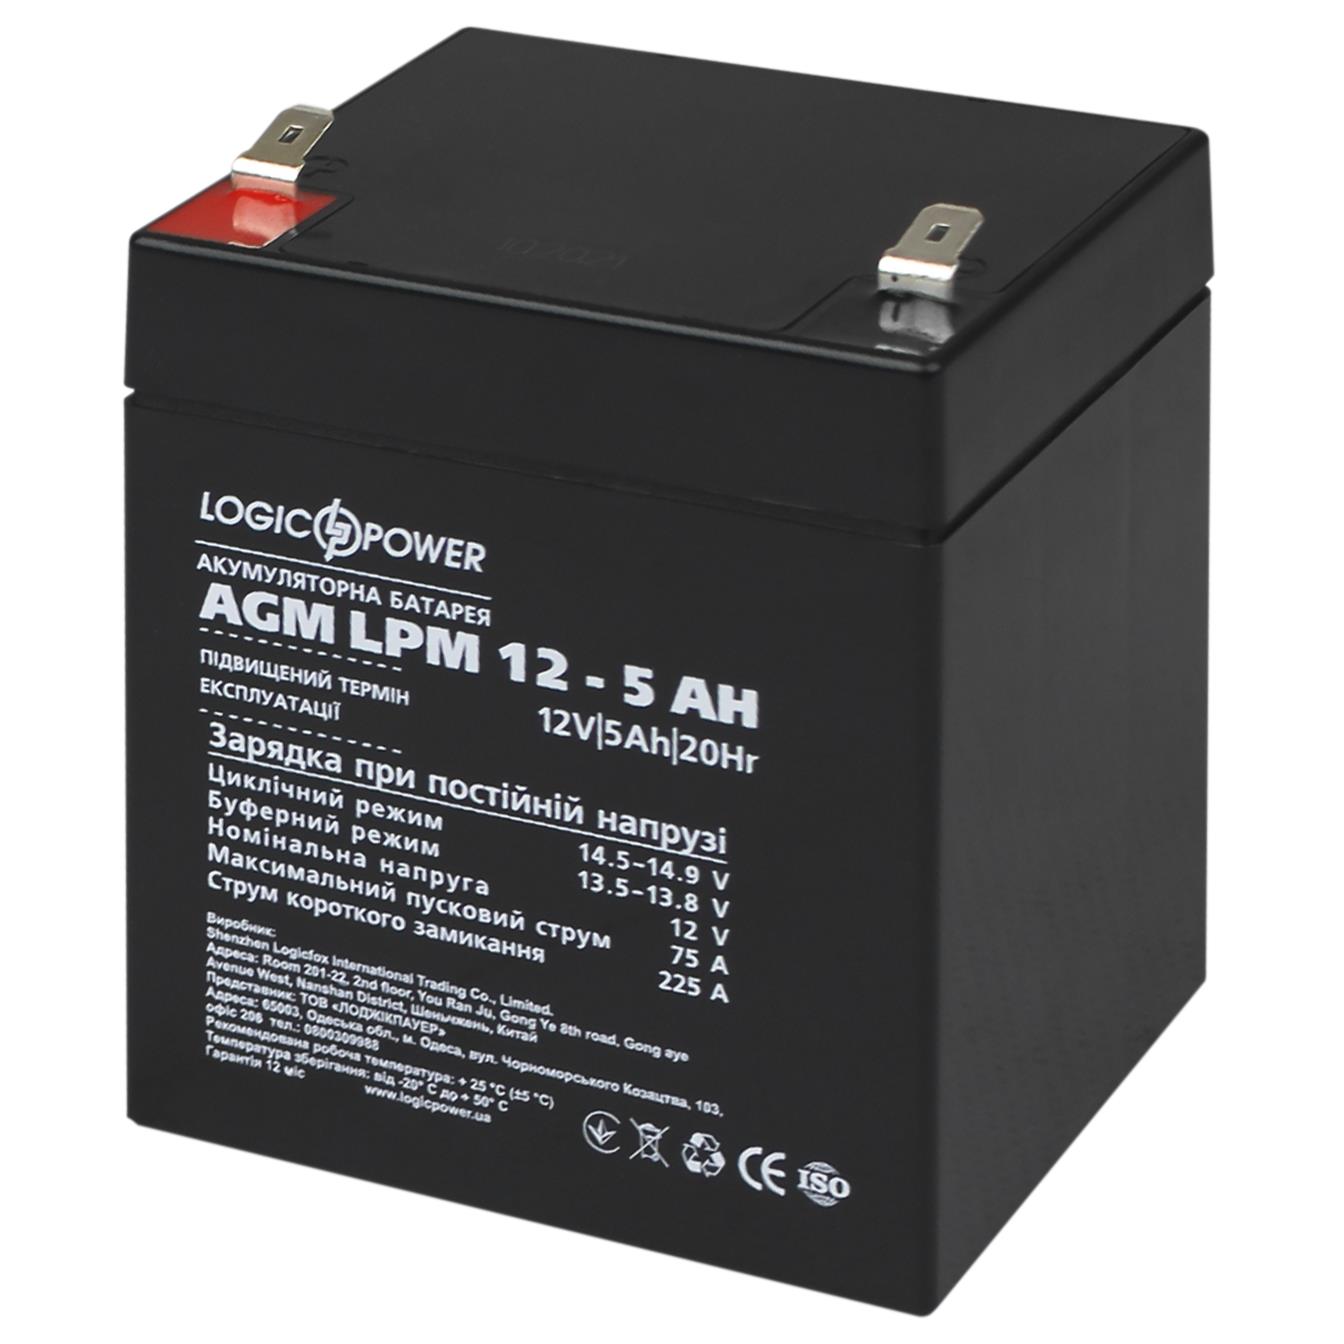 Характеристики аккумулятор 12 в LogicPower AGM LPM 12V - 5 Ah (3861)